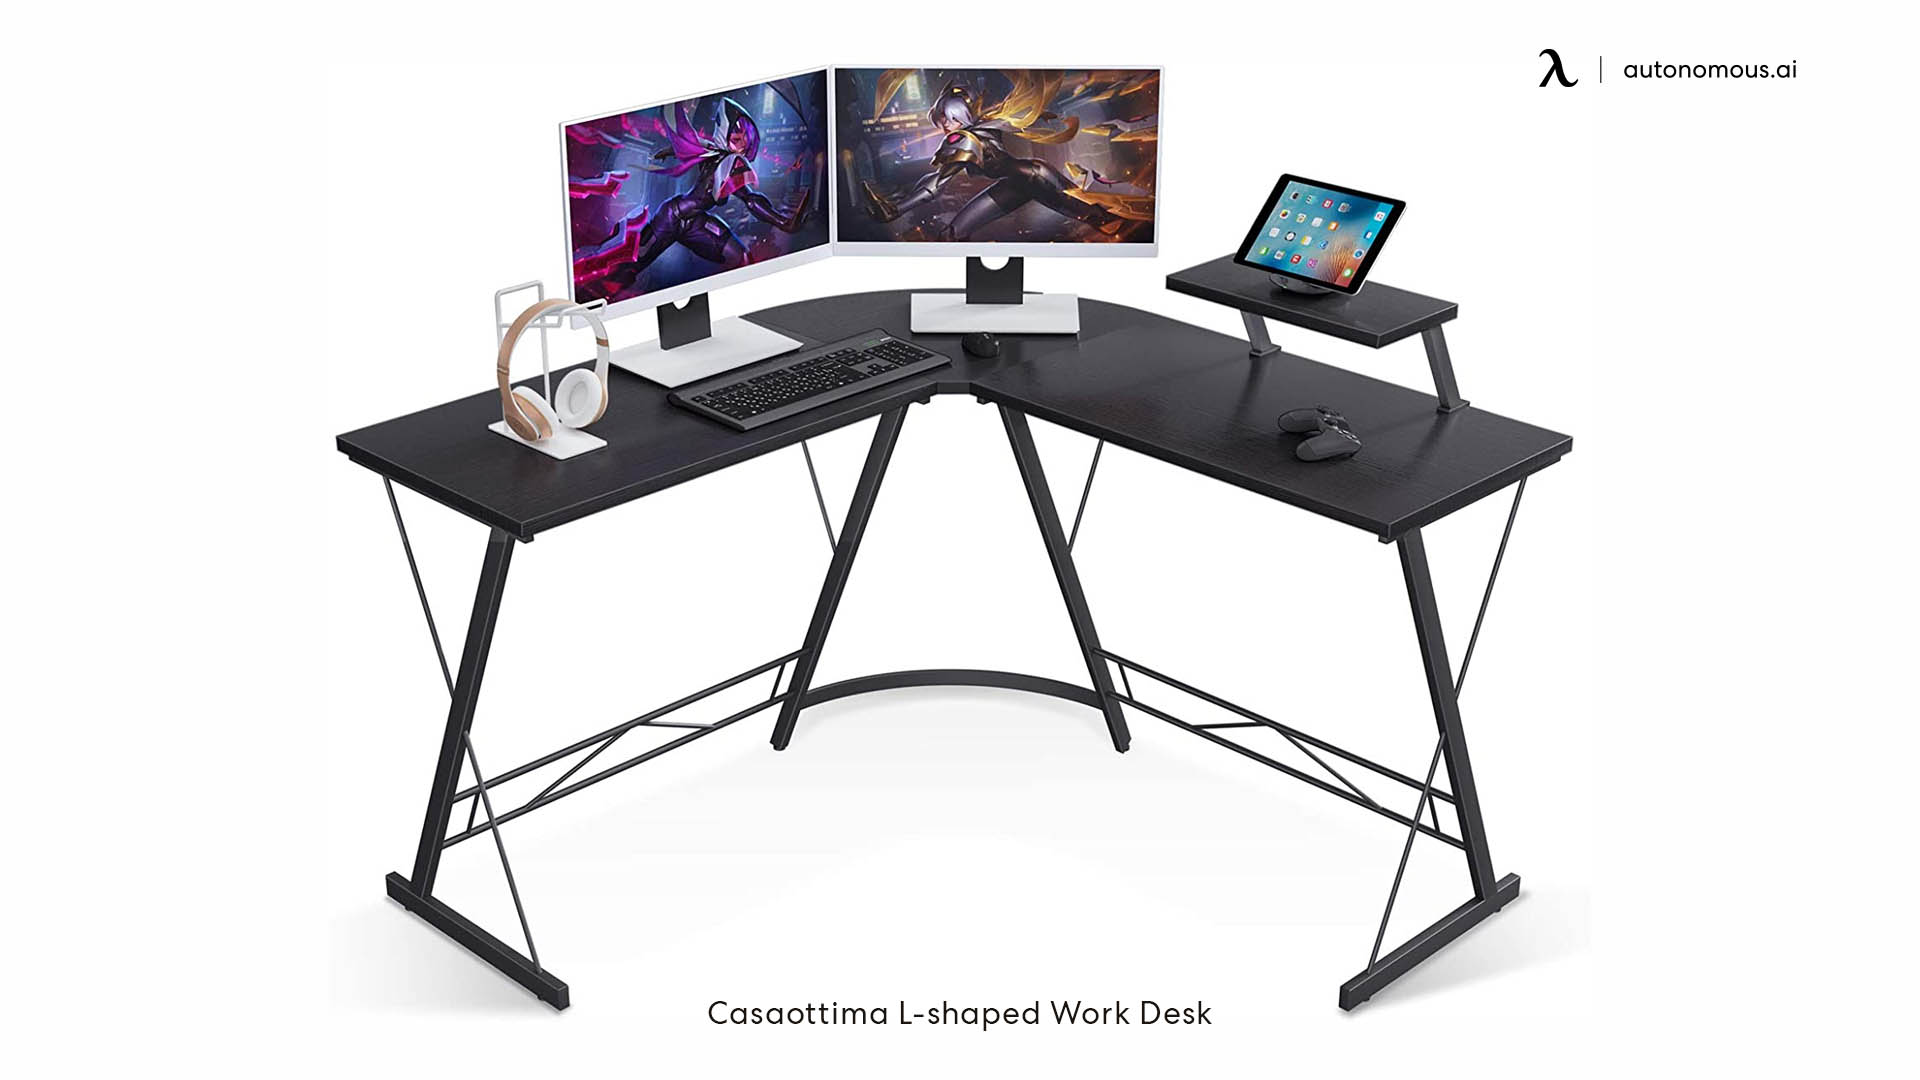 Casaottima L-shaped Work Desk